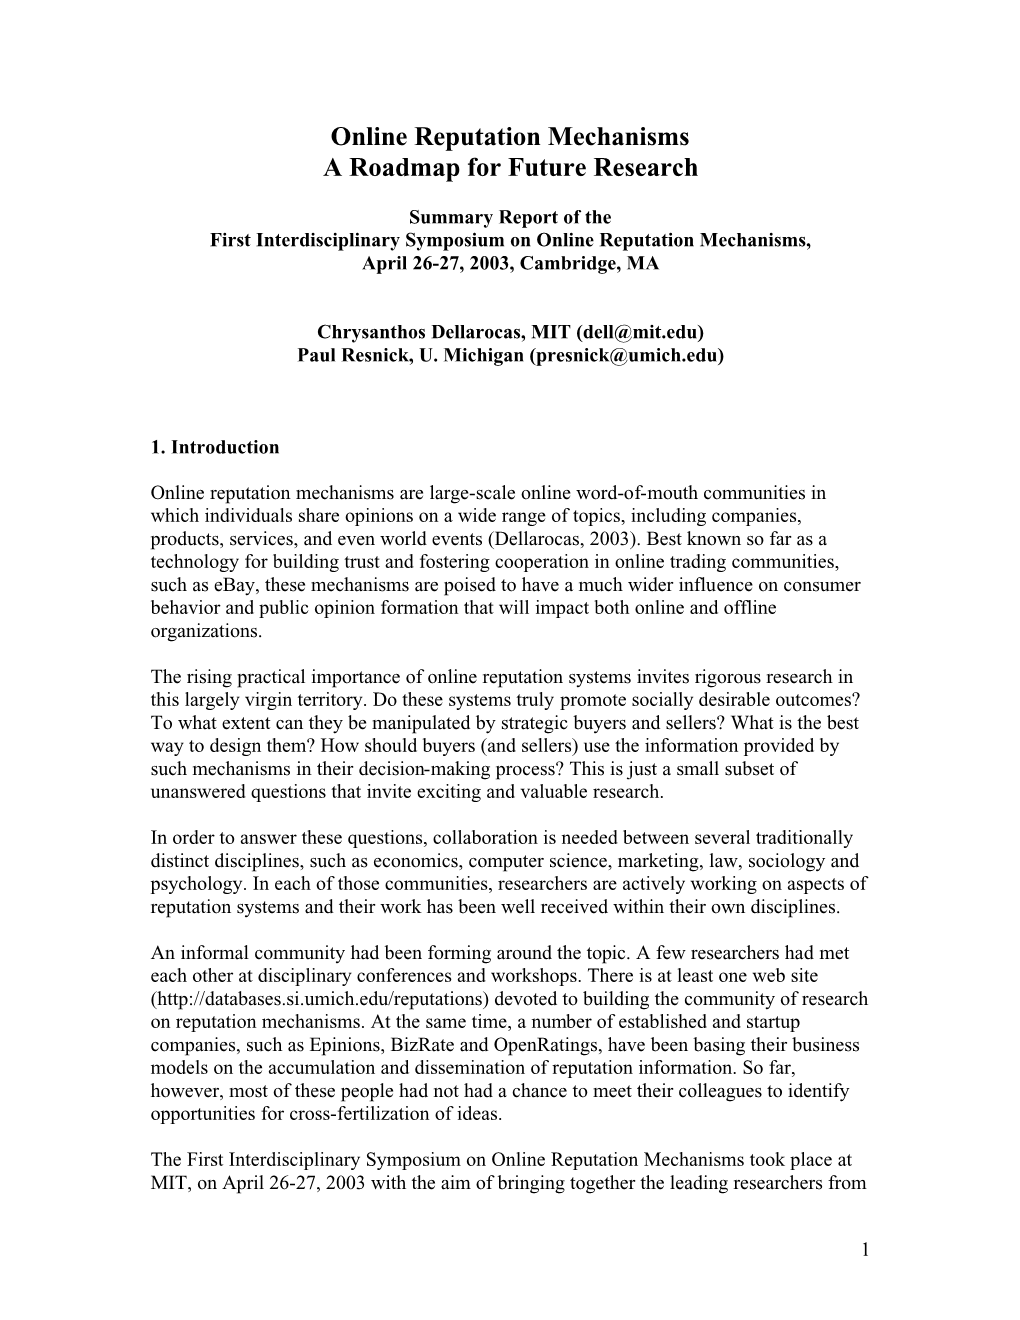 Online Reputation Mechanisms a Roadmap for Future Research